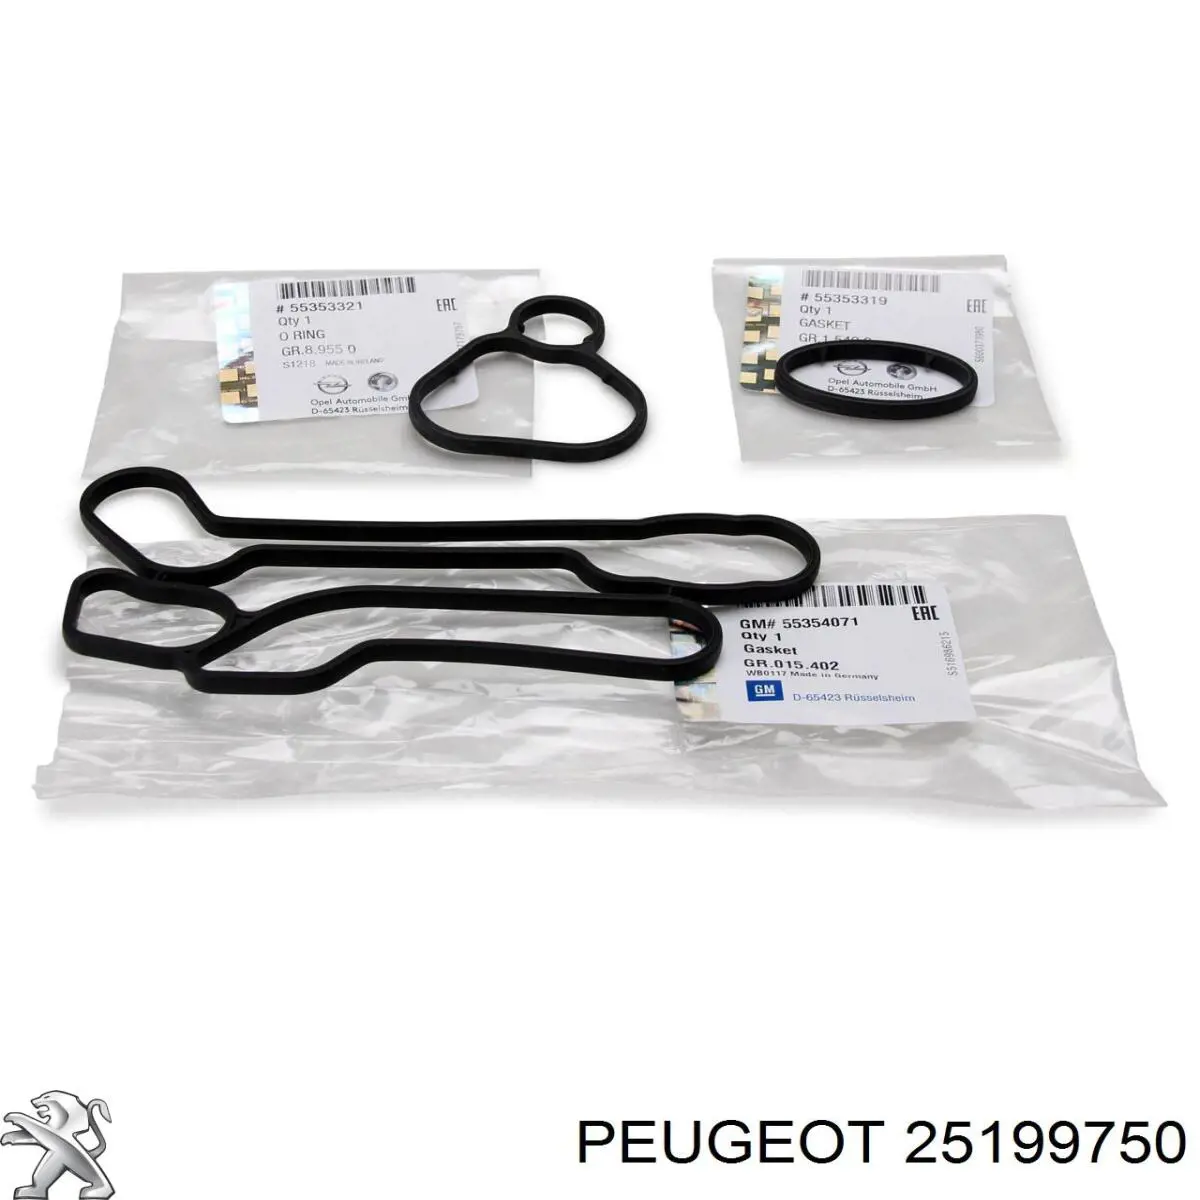 25199750 Peugeot/Citroen vedante de adaptador do filtro de óleo